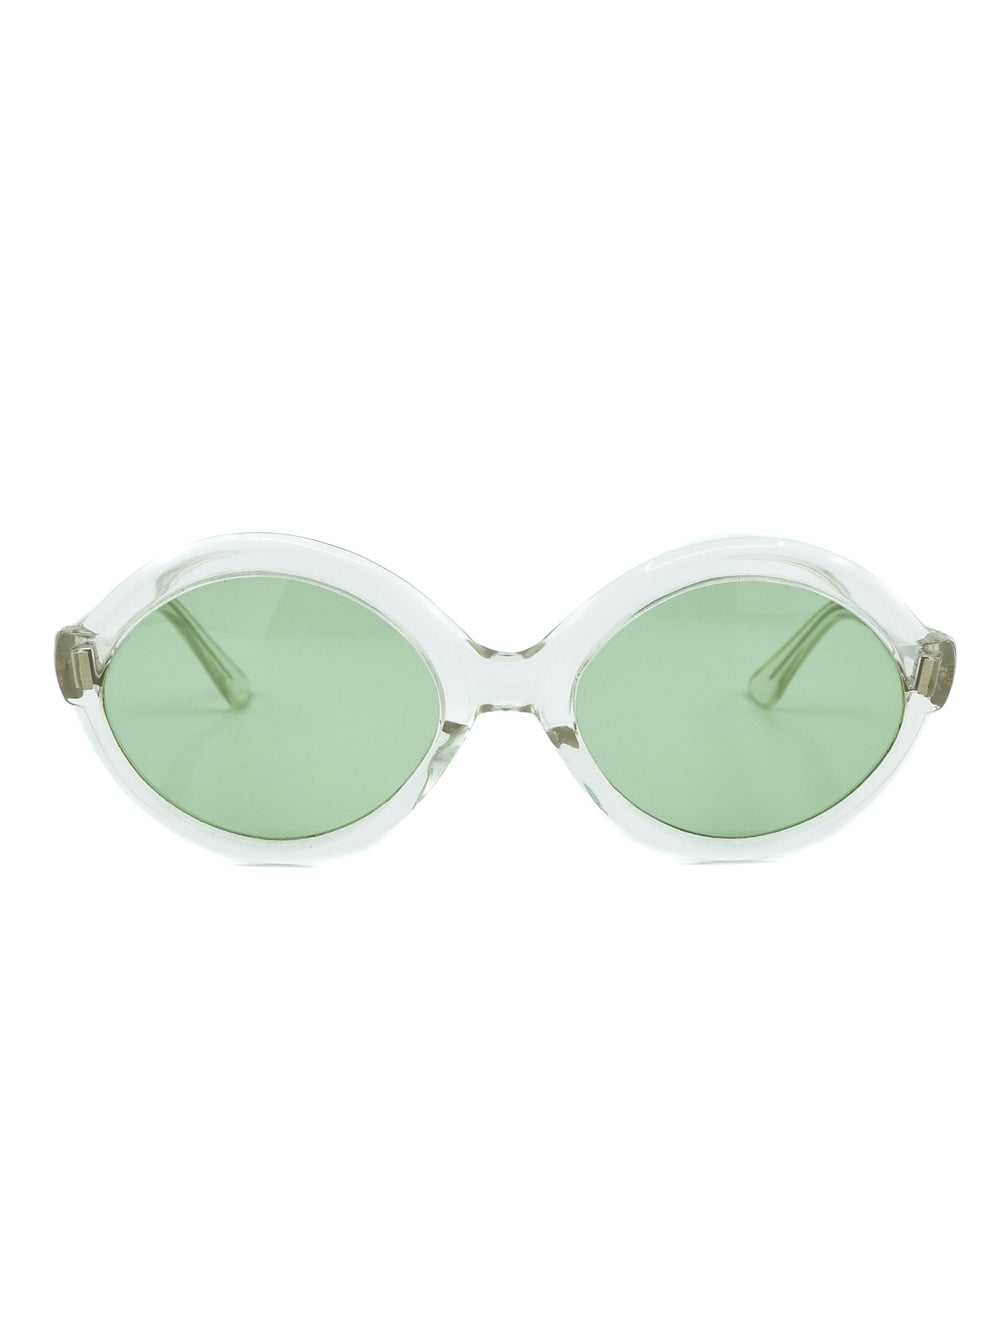 1960's Italian Green Lens Sunglasses - Gem